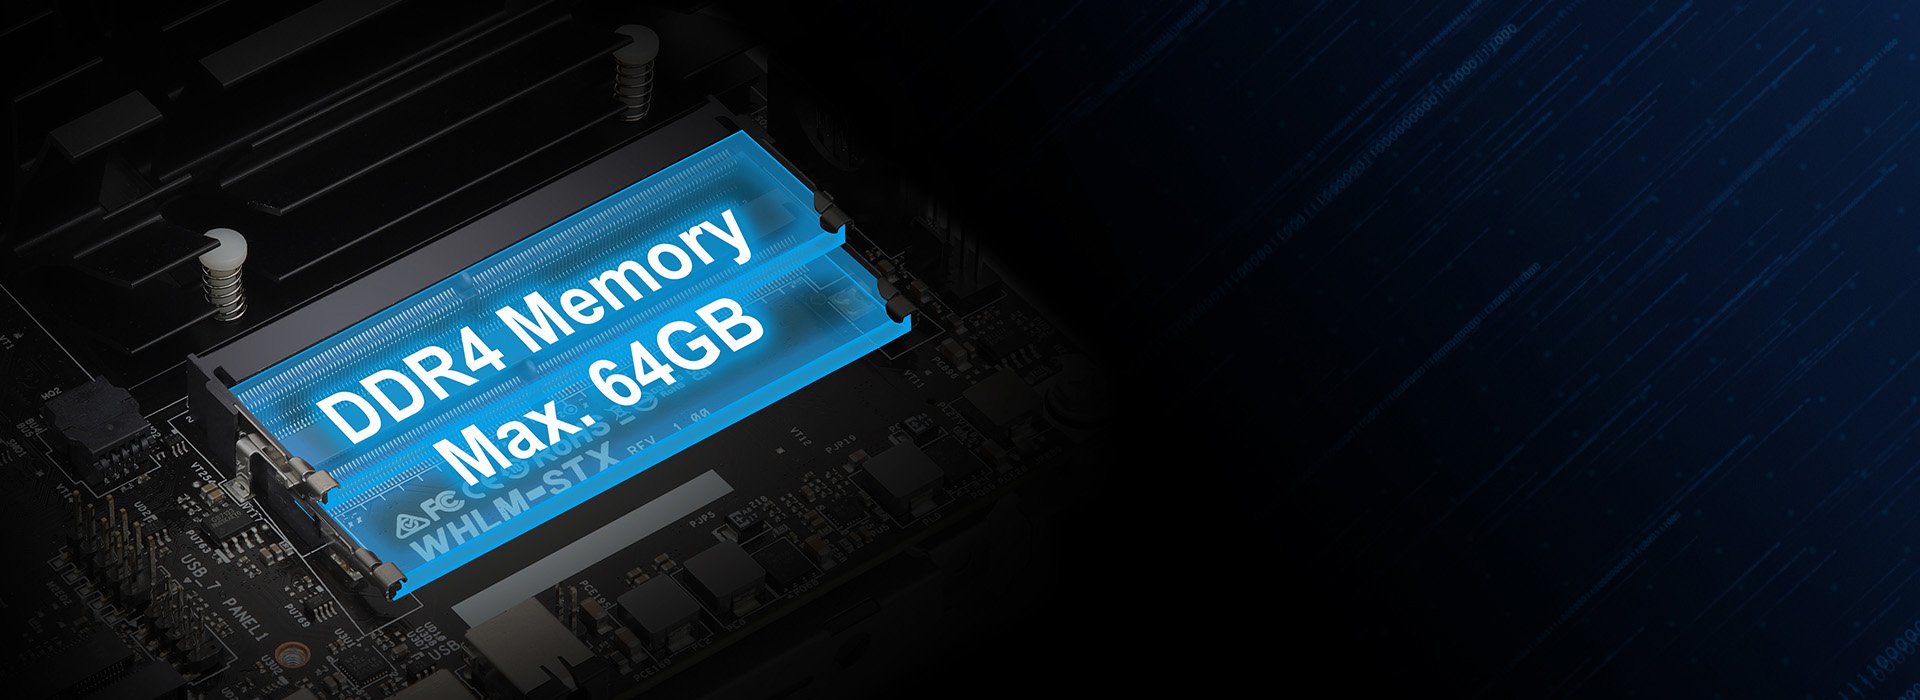 DM4205 Dual Channel DDR4 Memory